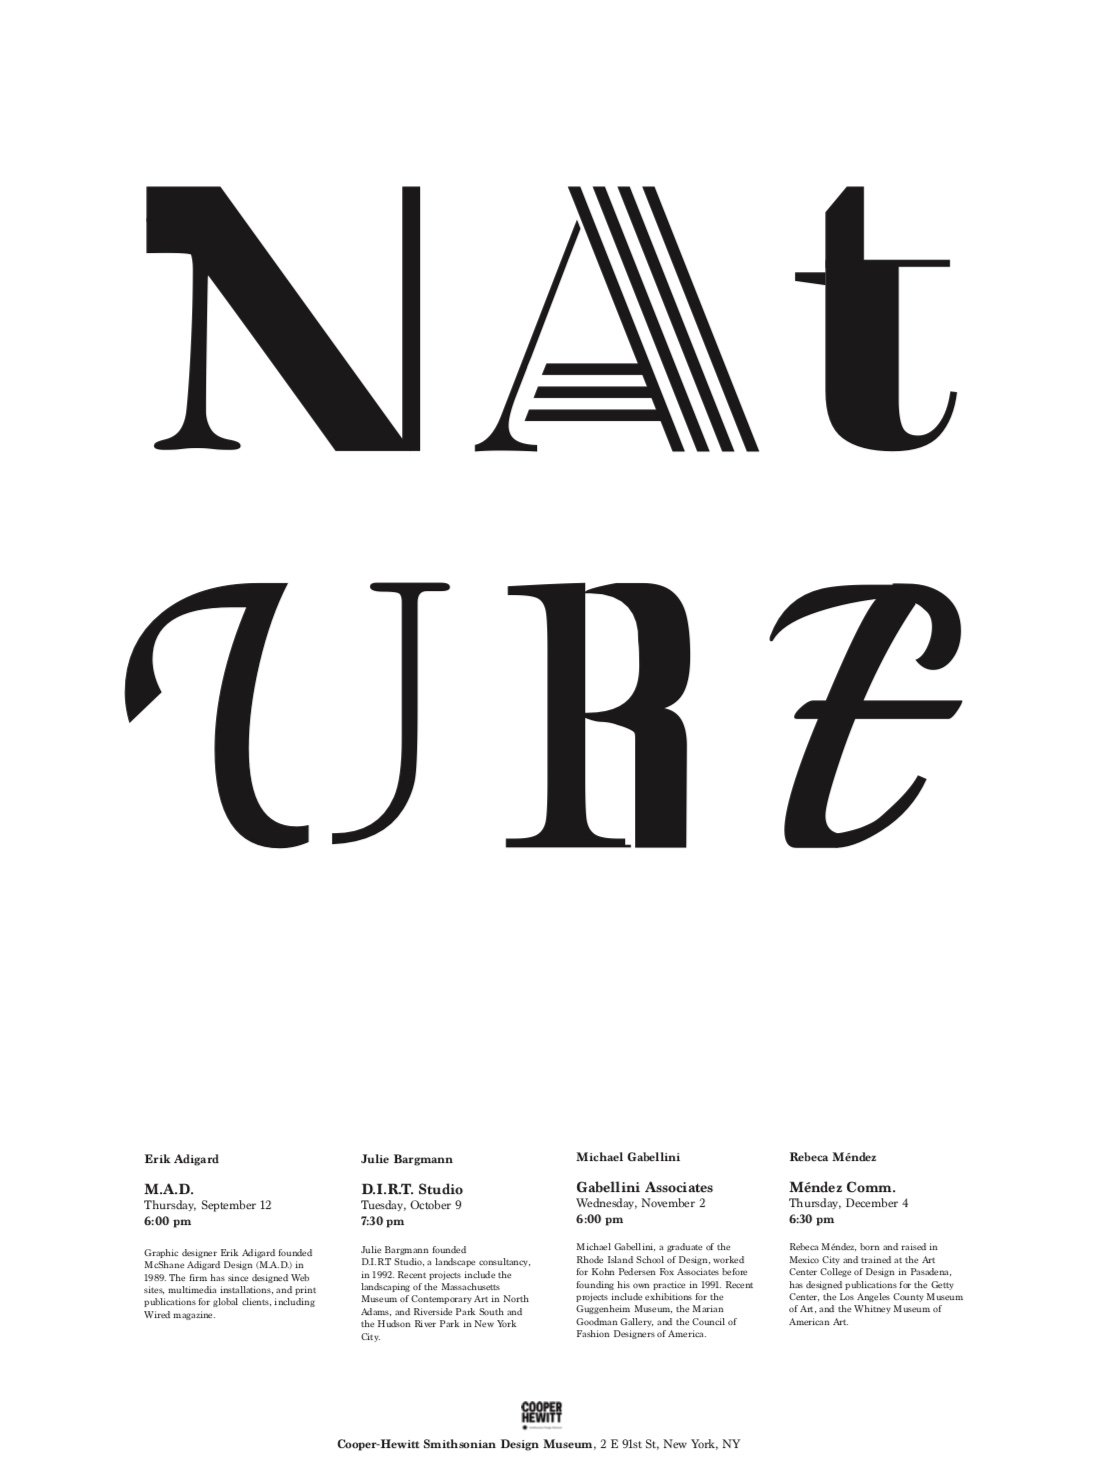 Nature : Cooper Hewitt Smithsonian Design Museum — Larry Cardenas